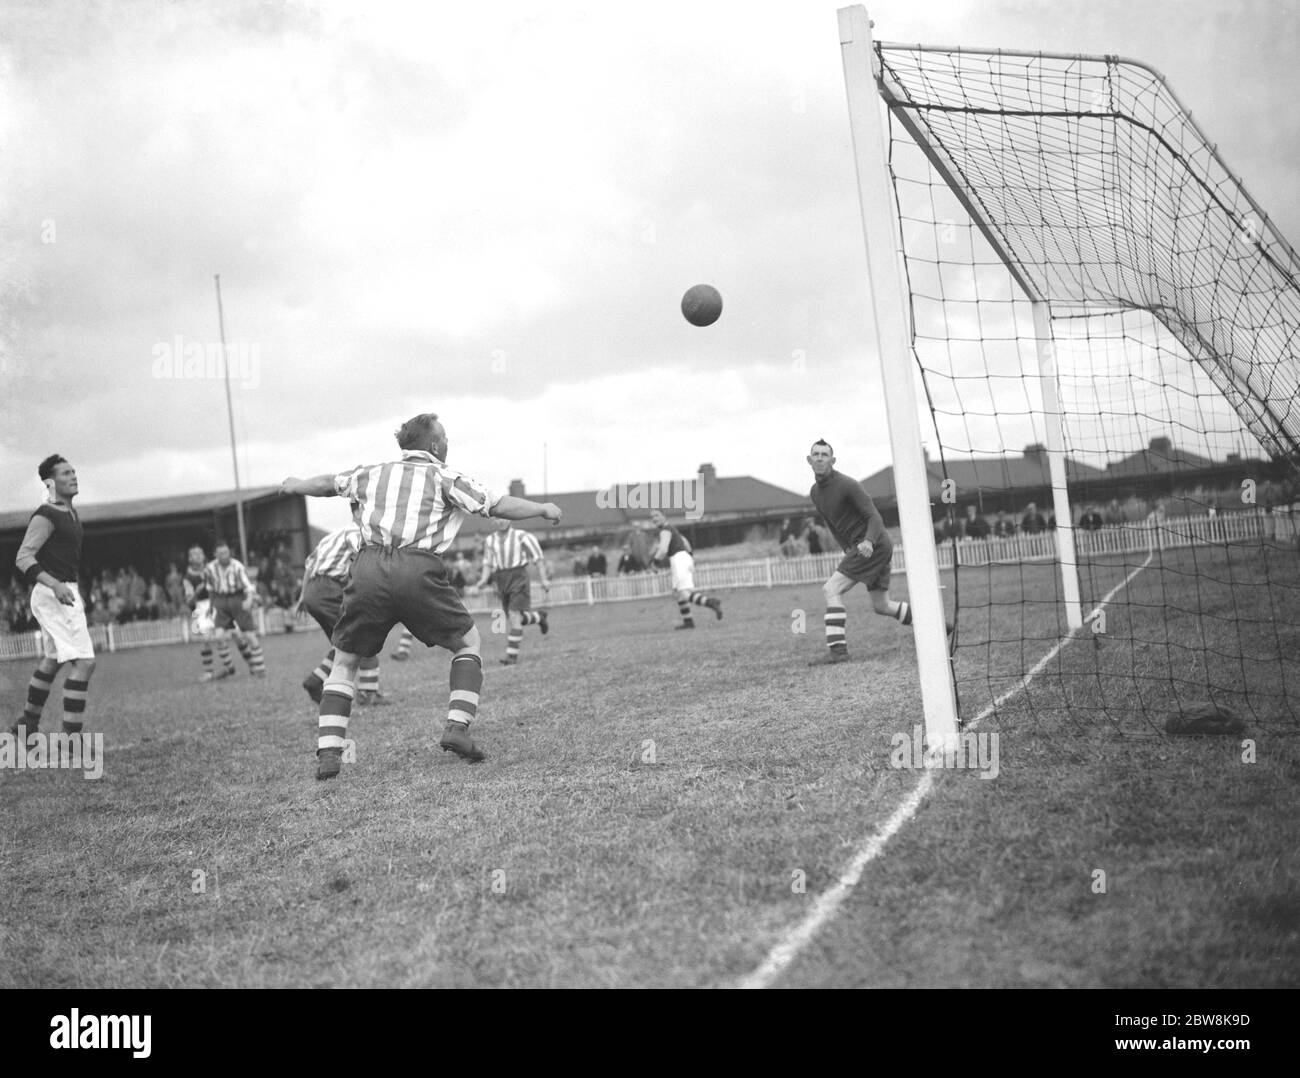 Dartford Reserve vs. Ashford Town - Kent League - 11/09/37 1937 Banque D'Images